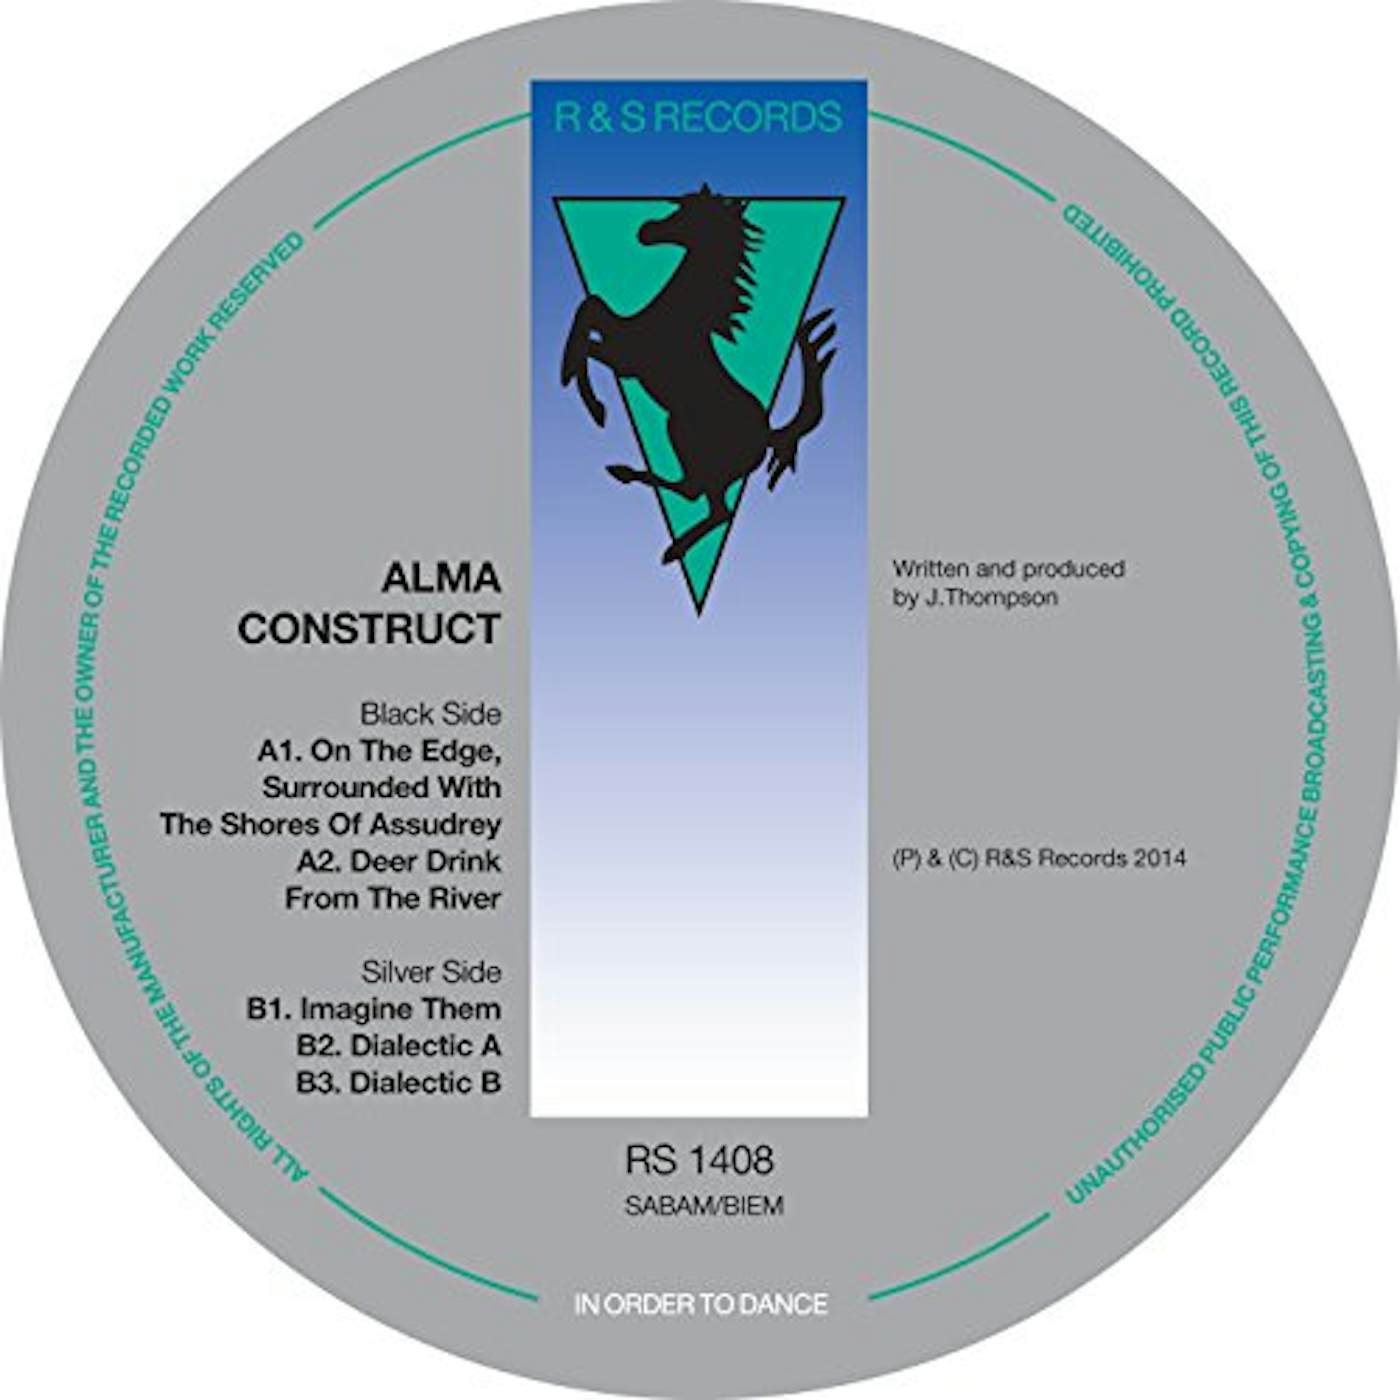 ALMA CONSTRUCT Vinyl Record